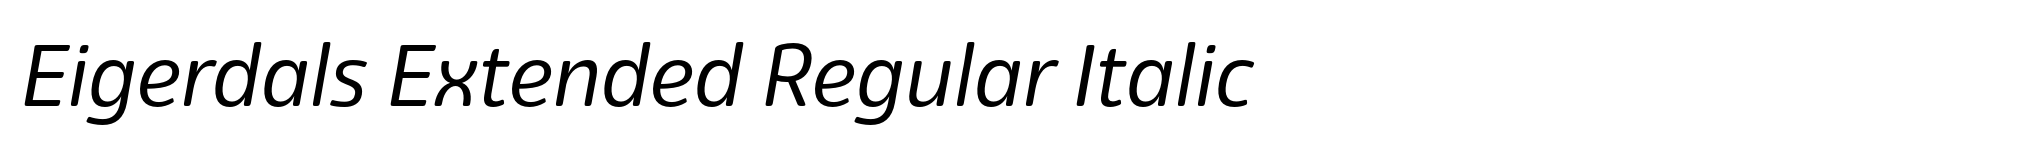 Eigerdals Extended Regular Italic image